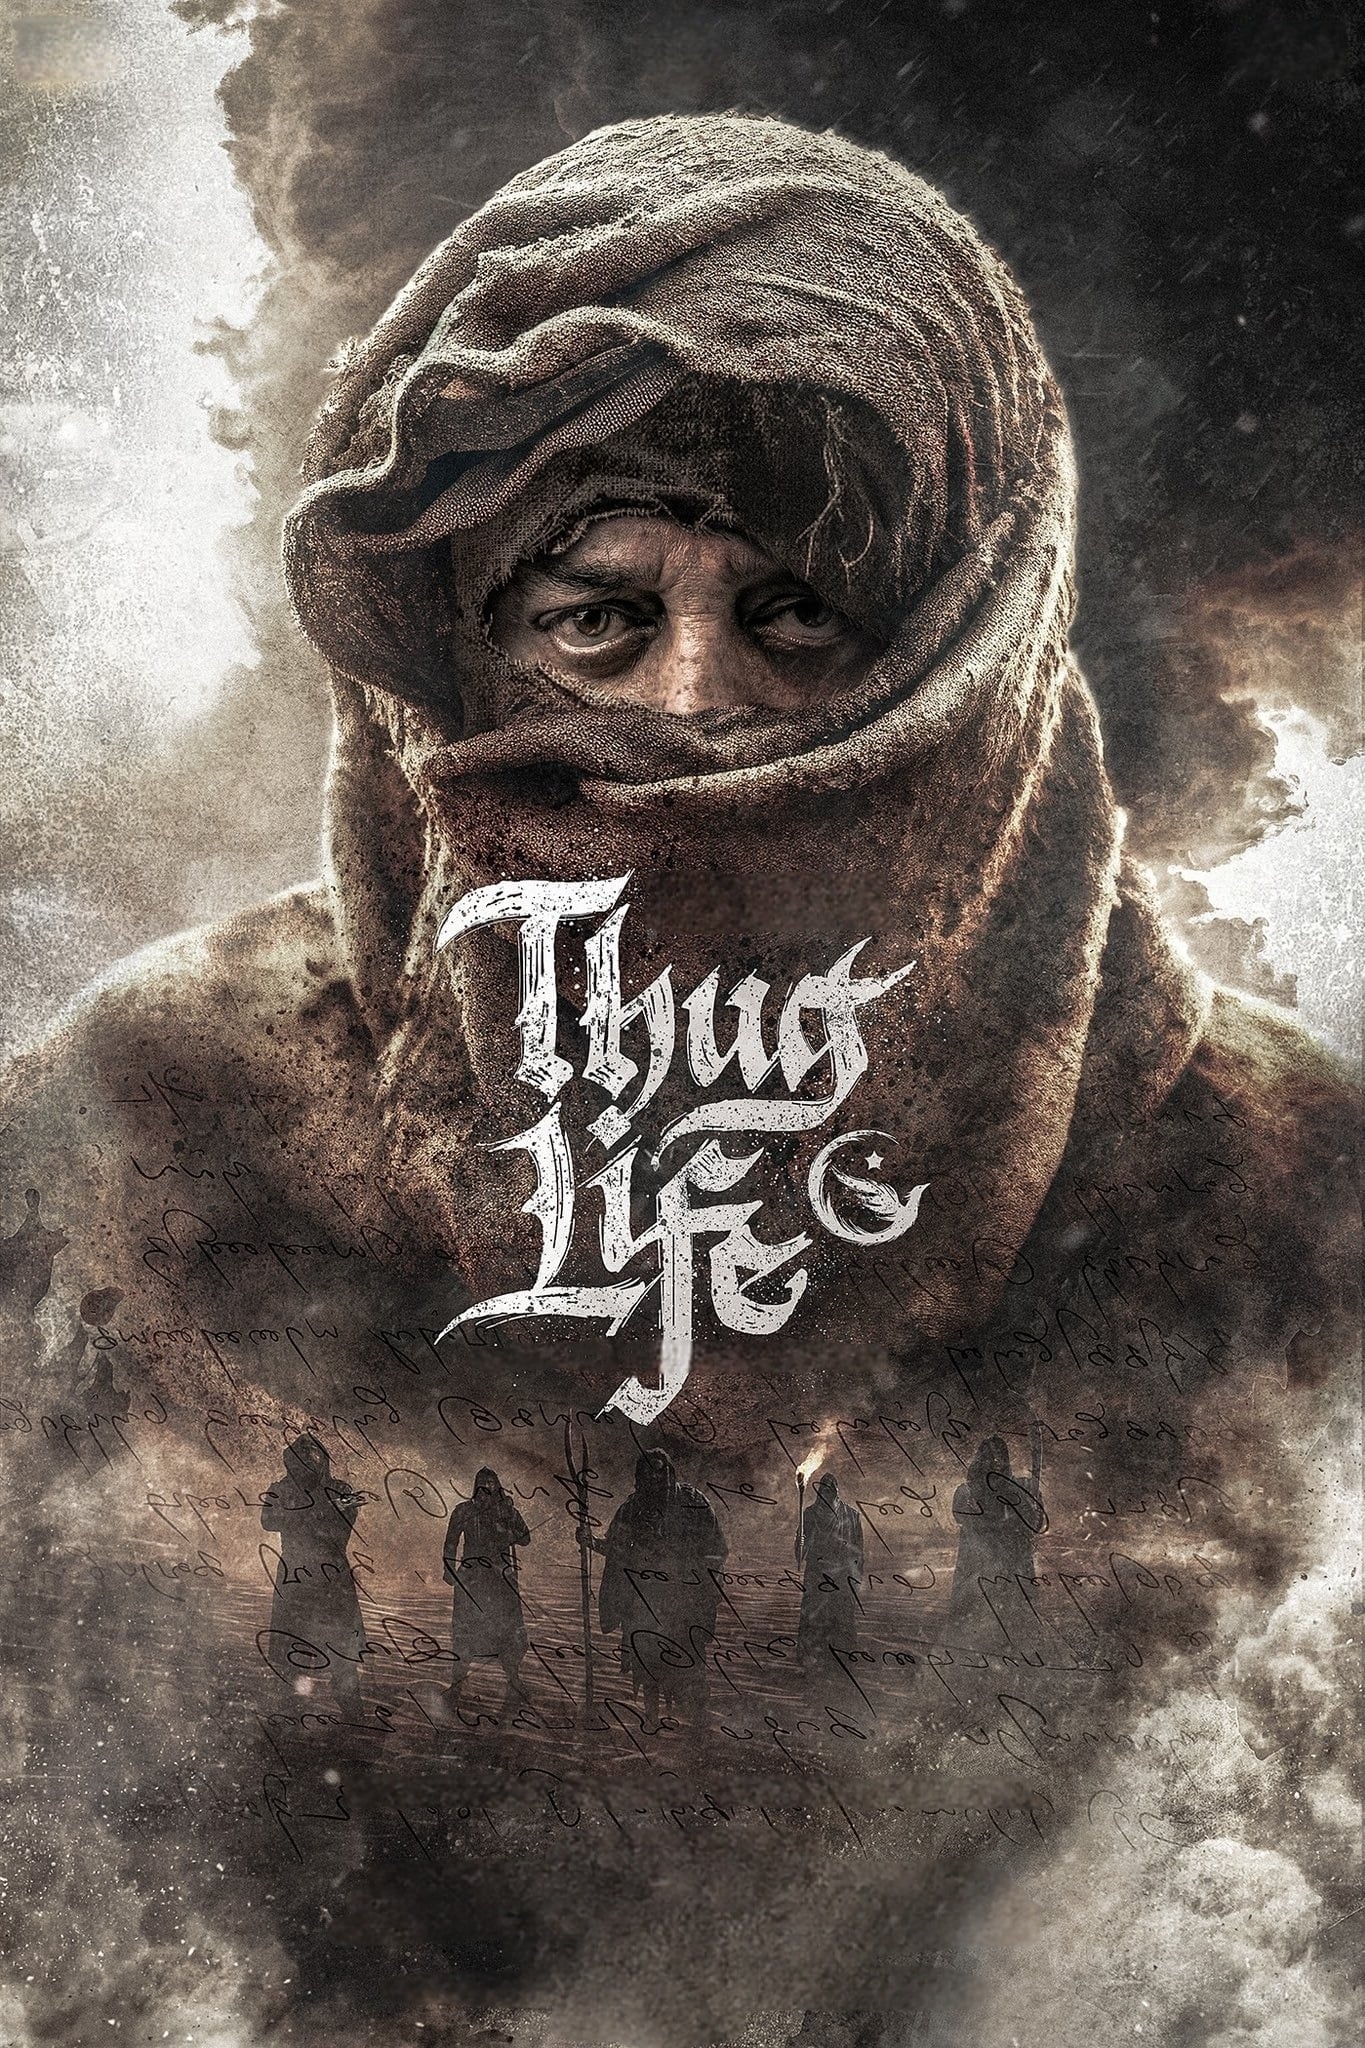 Thug Life film